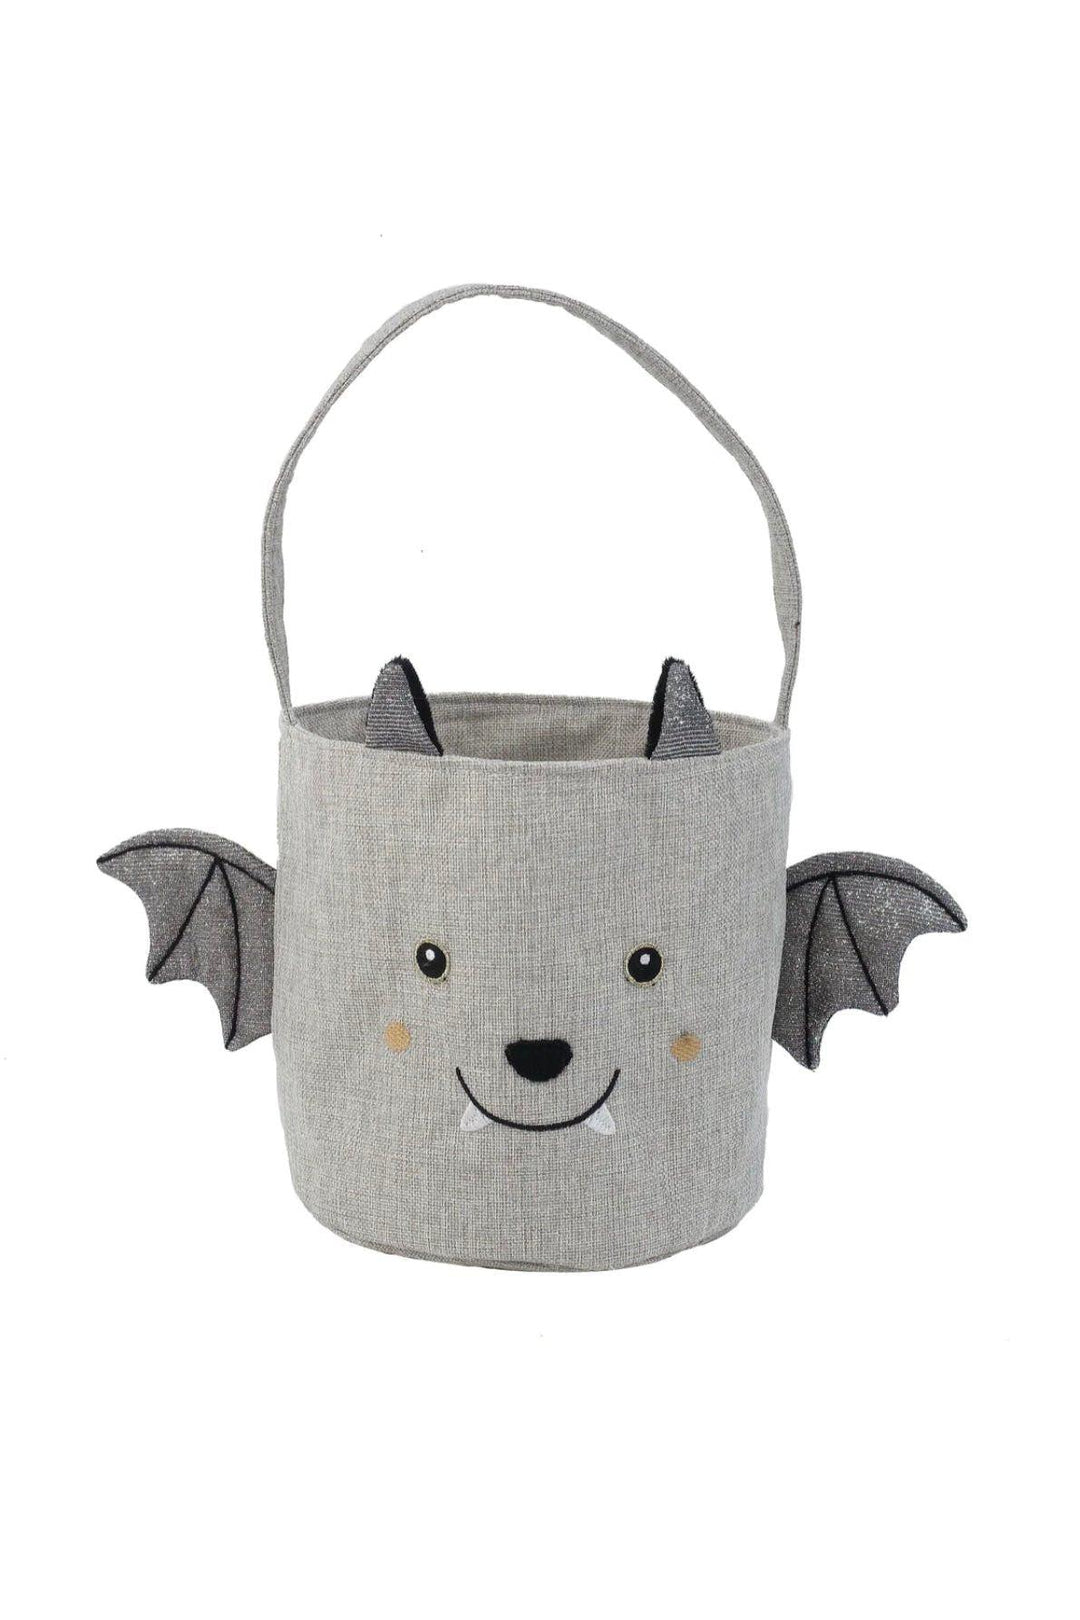 Cute Bat Trick-or-Treat Bag - 8 Inches Diameter - Make Halloween Magical!